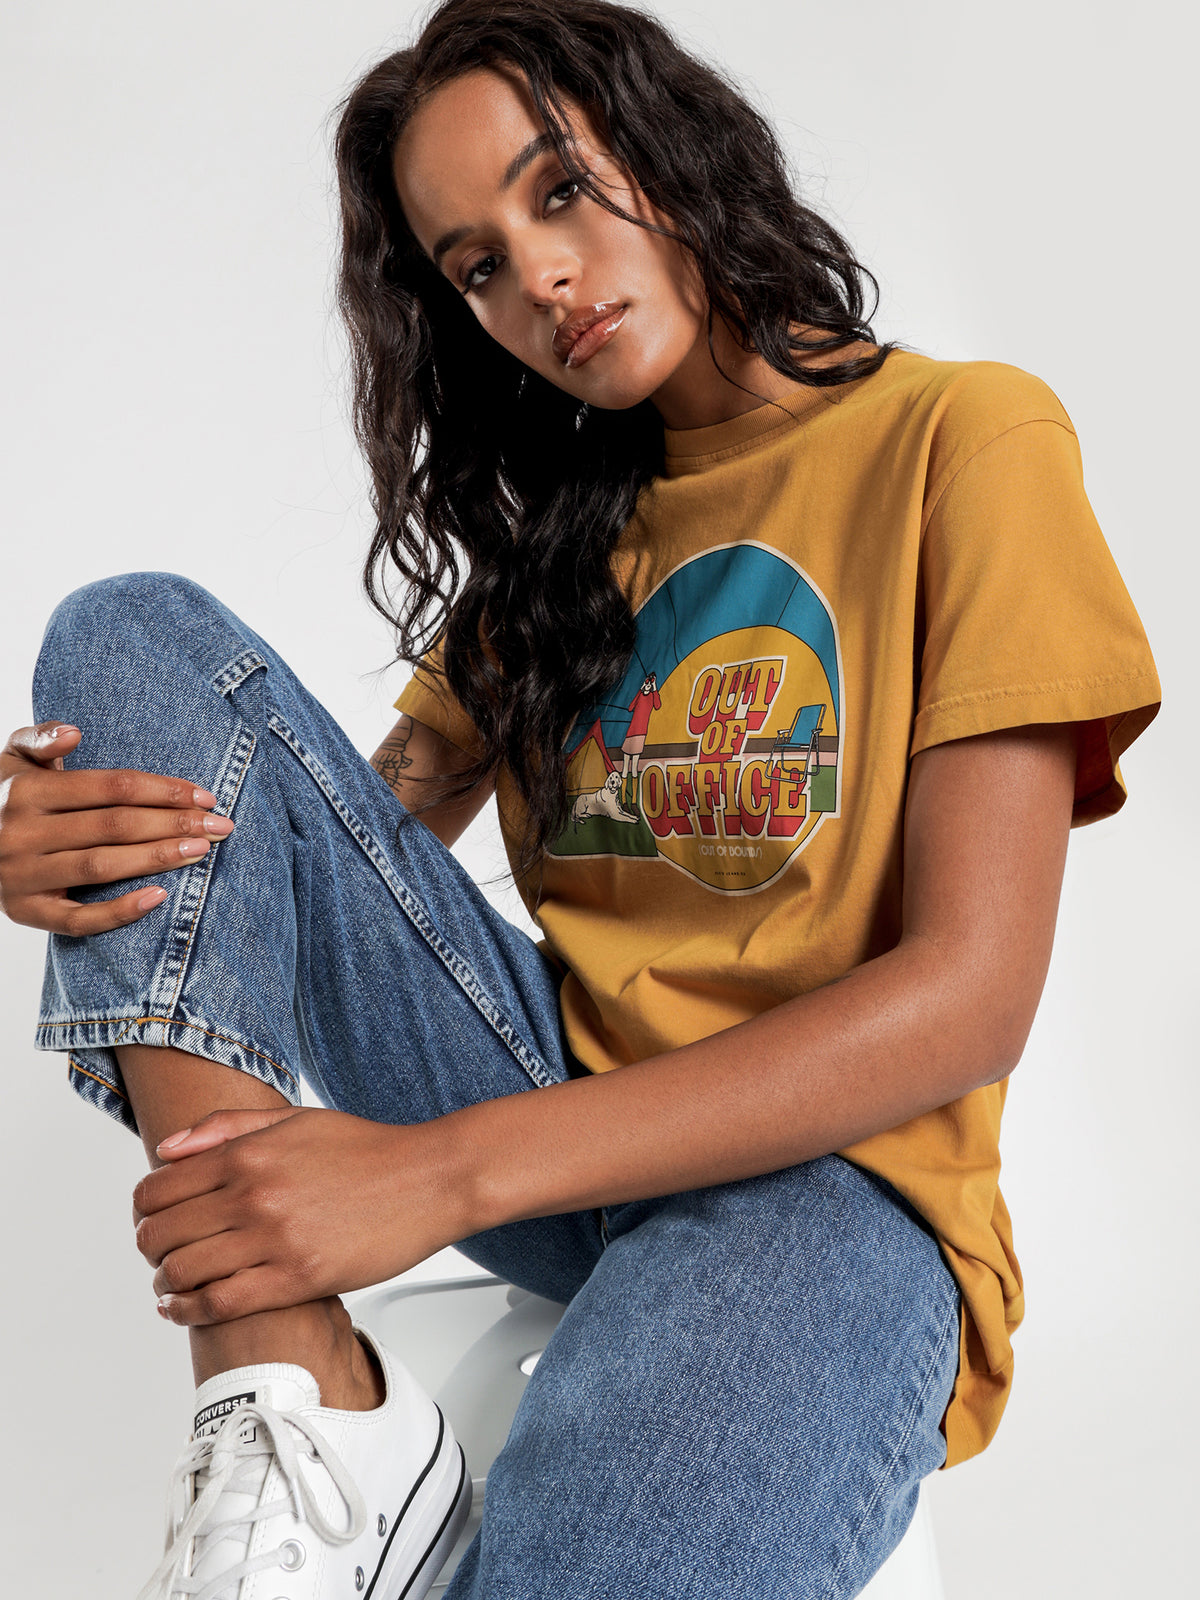 Camper Tina T-Shirt in Amber